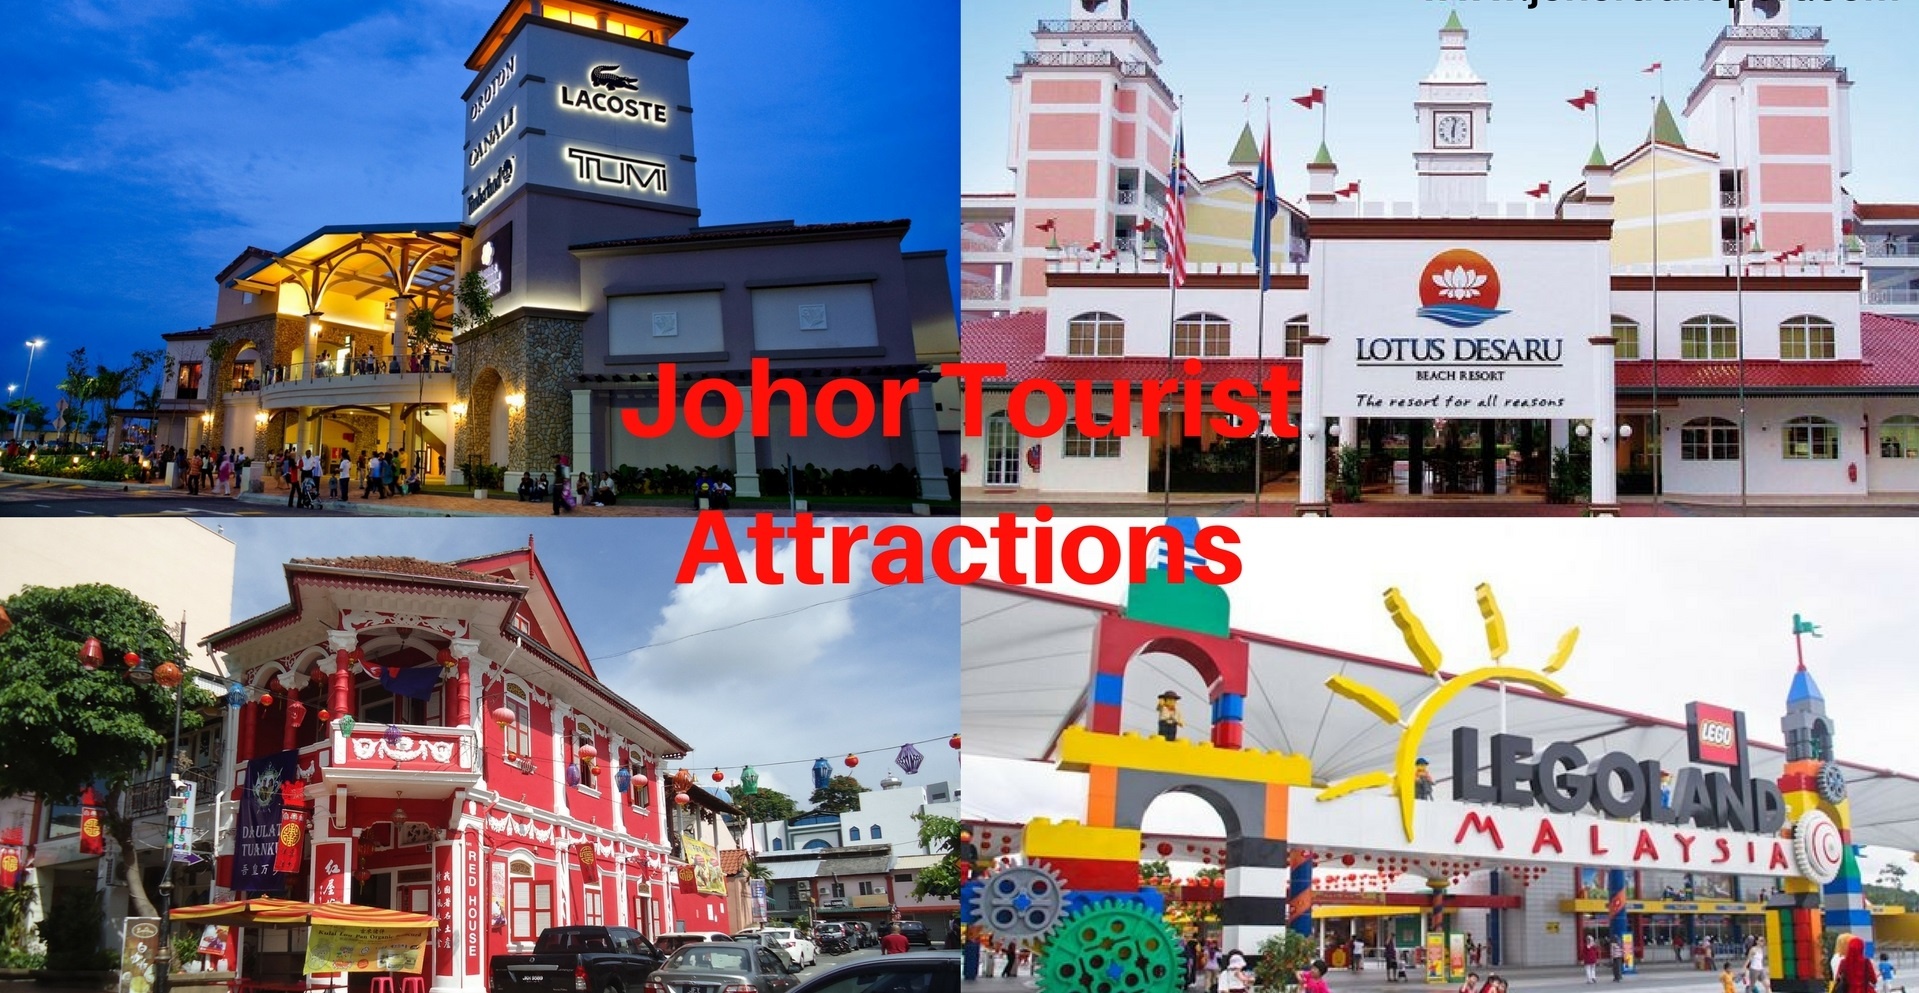 Johor Tourist Attractions Clarke Quay Central